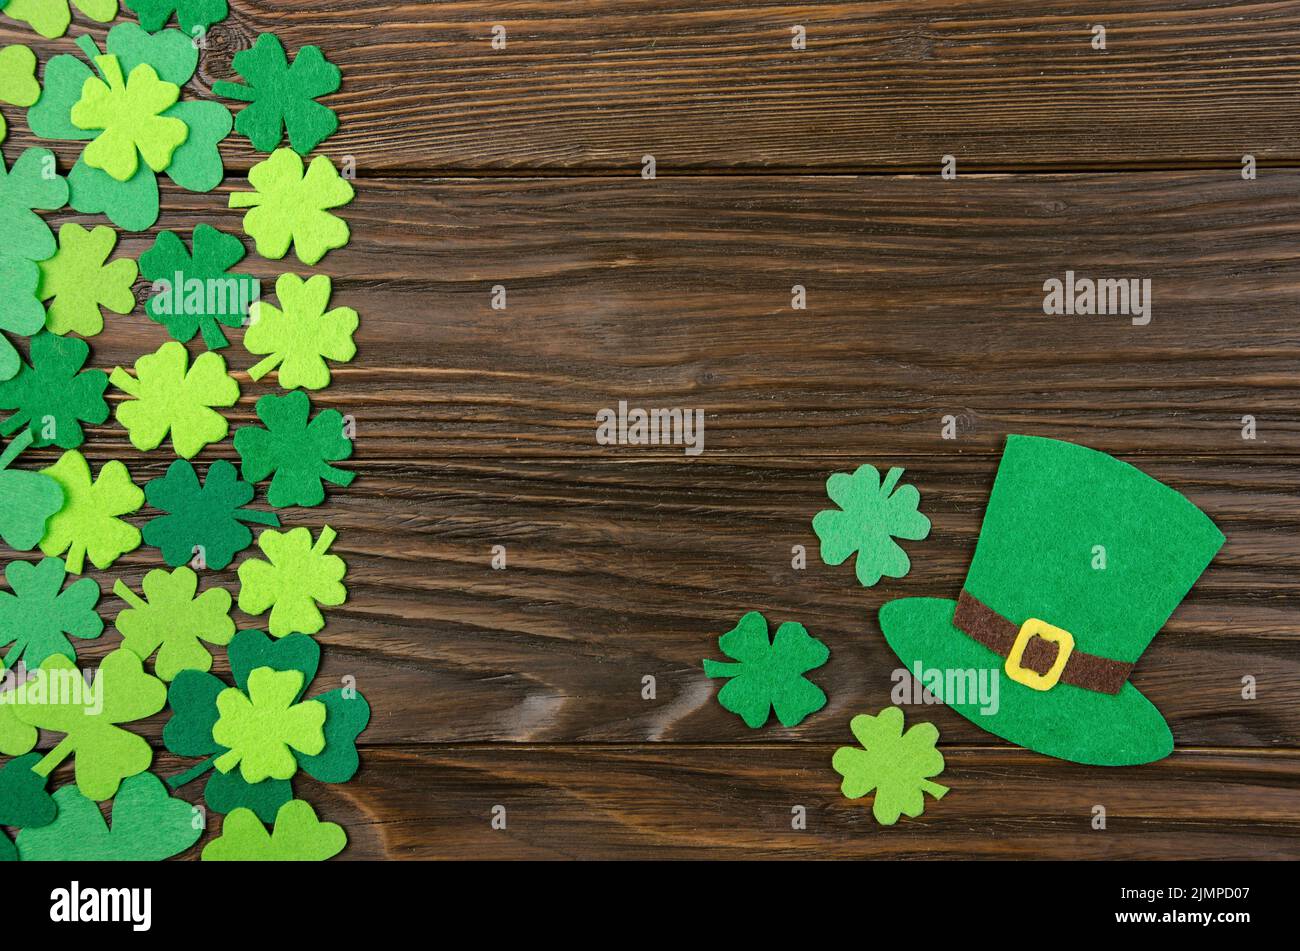 Happy Saint Patrick's mockup of handmade felt hat and shamrock clover leaves on wooden background. Stock Photo